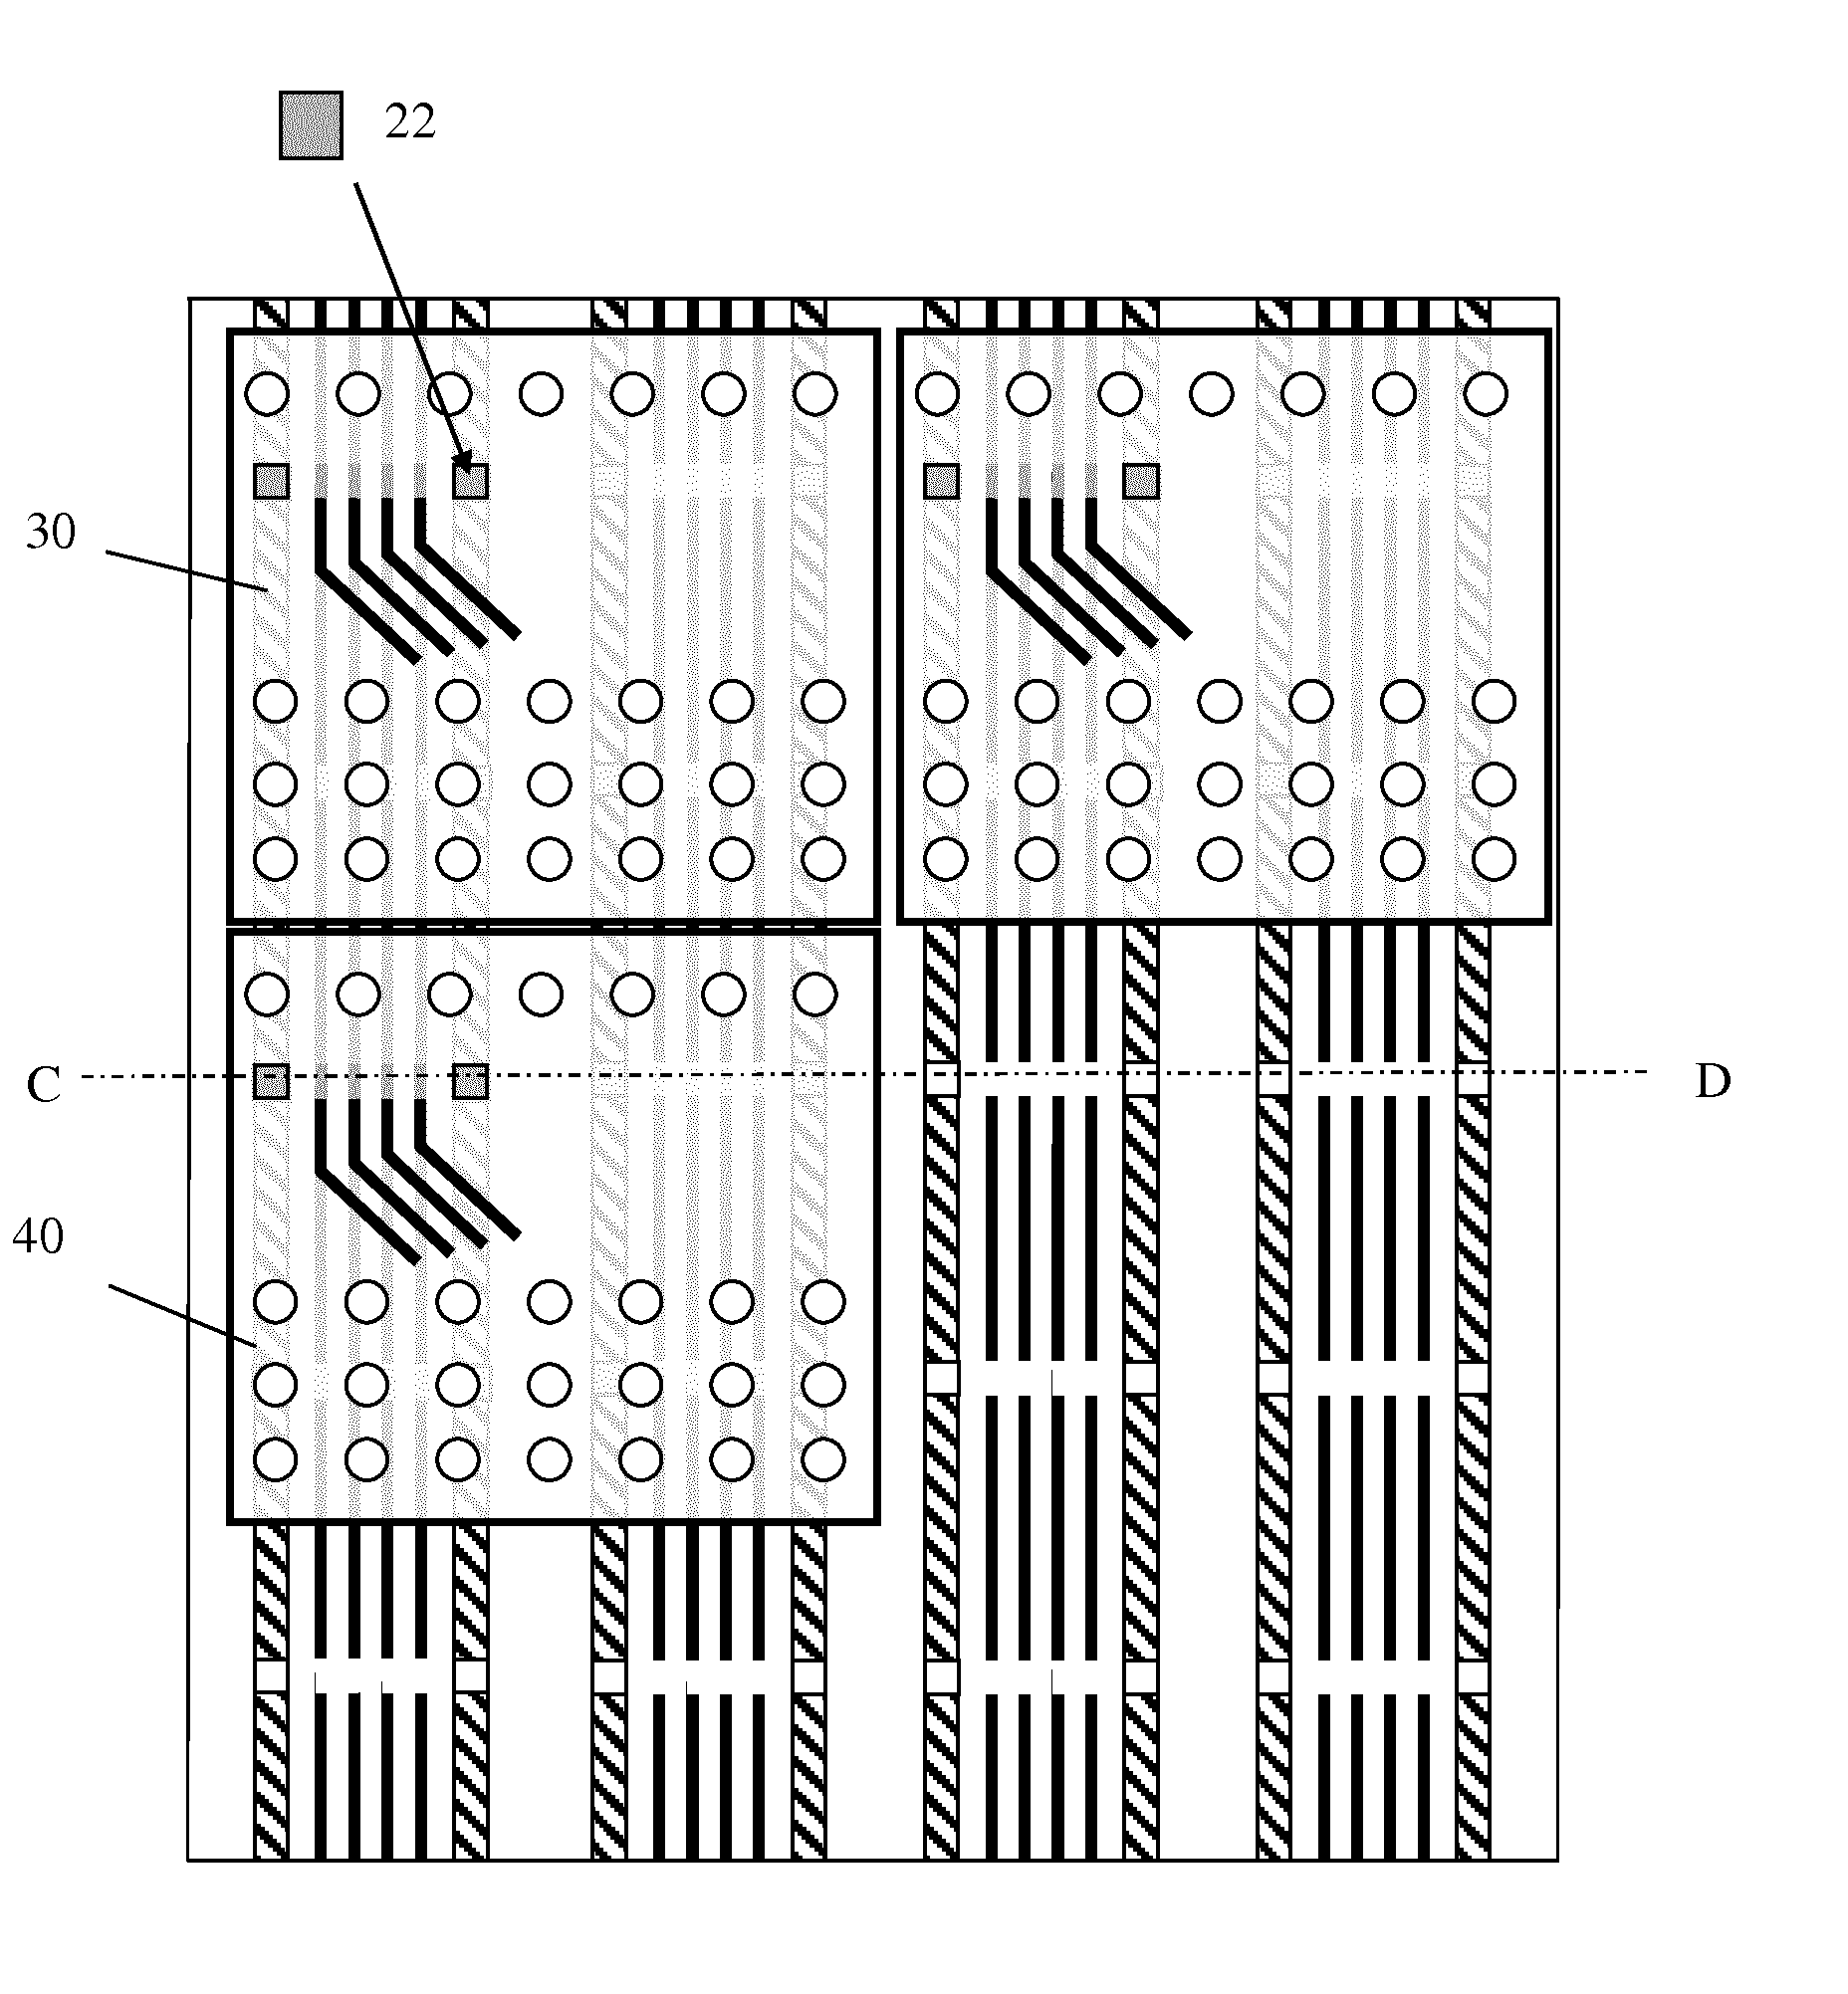 Tiled display and method of assembling same